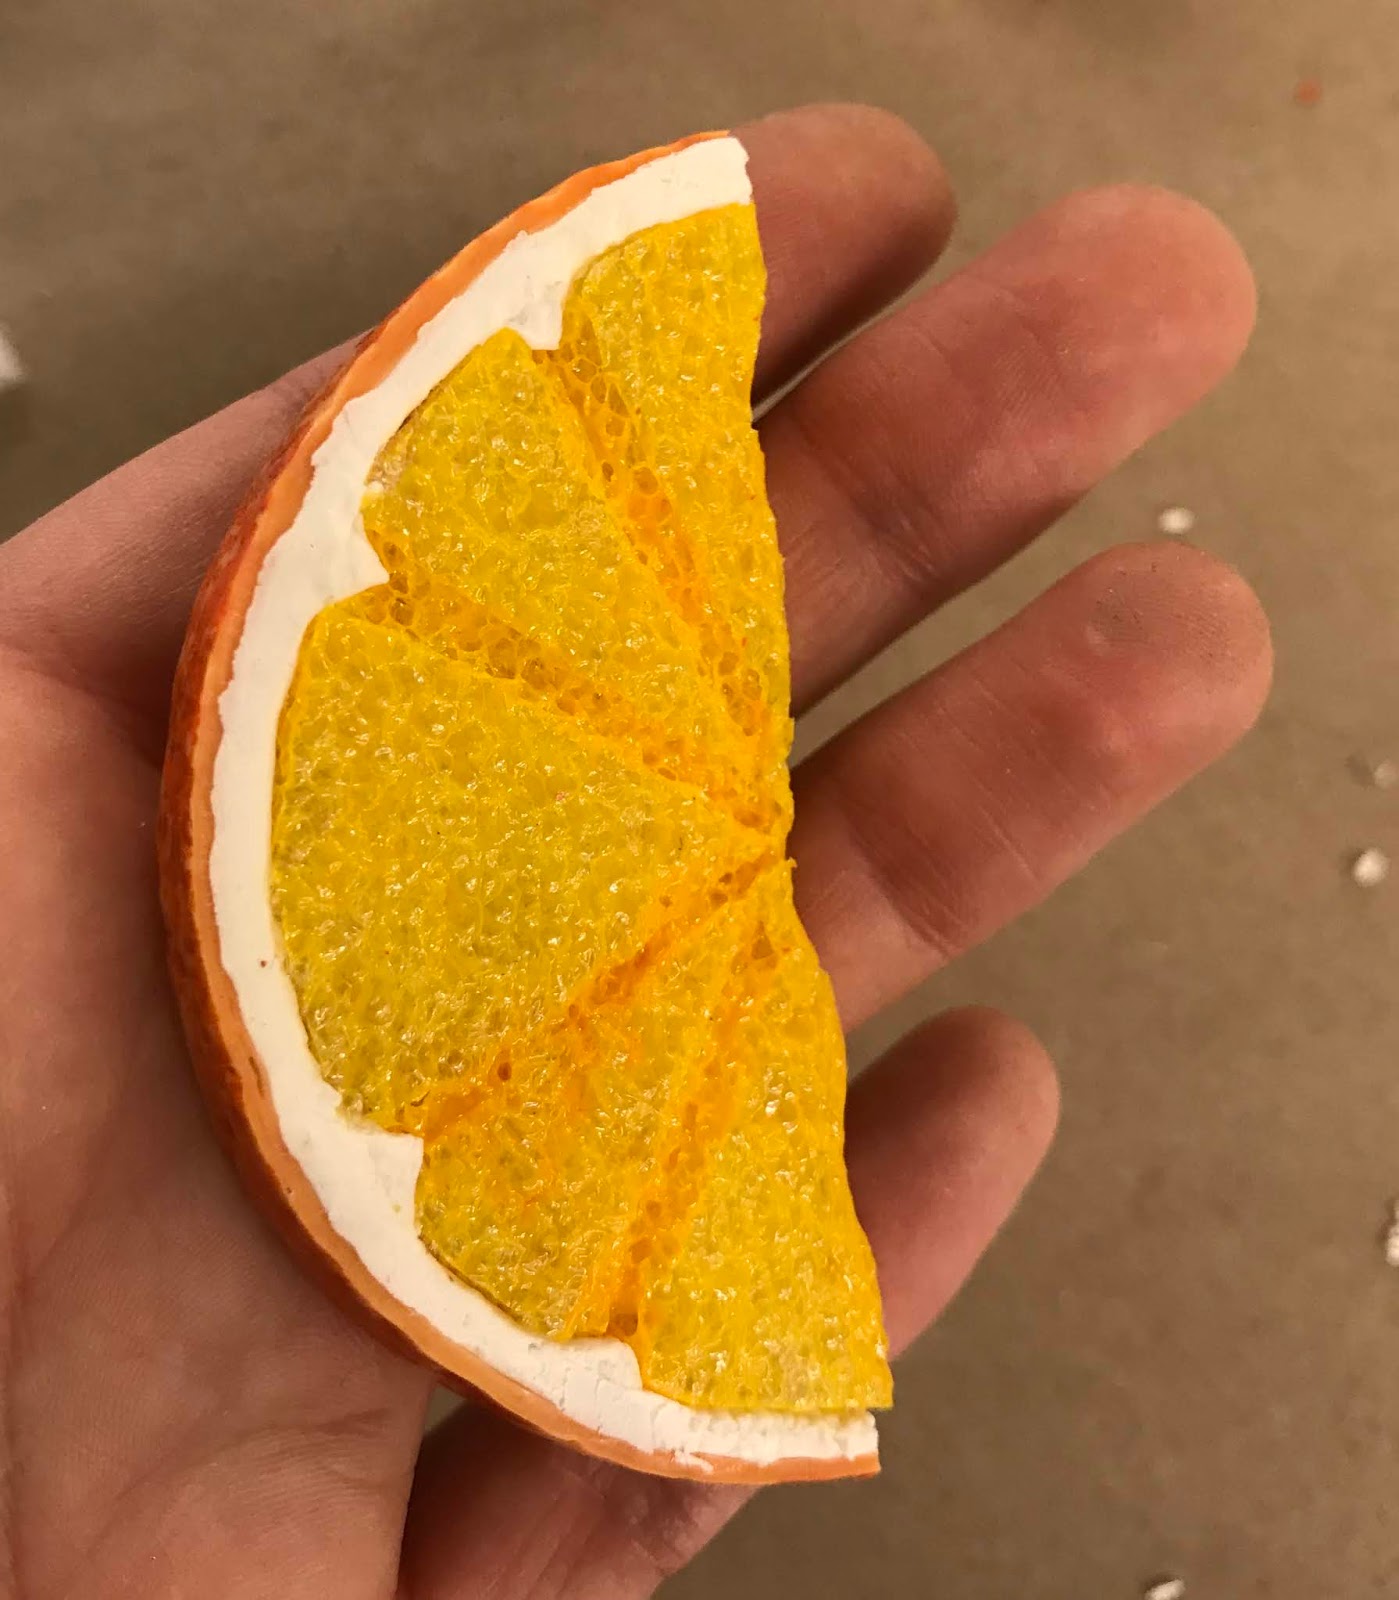 How To Make A Felt Orange Slice 